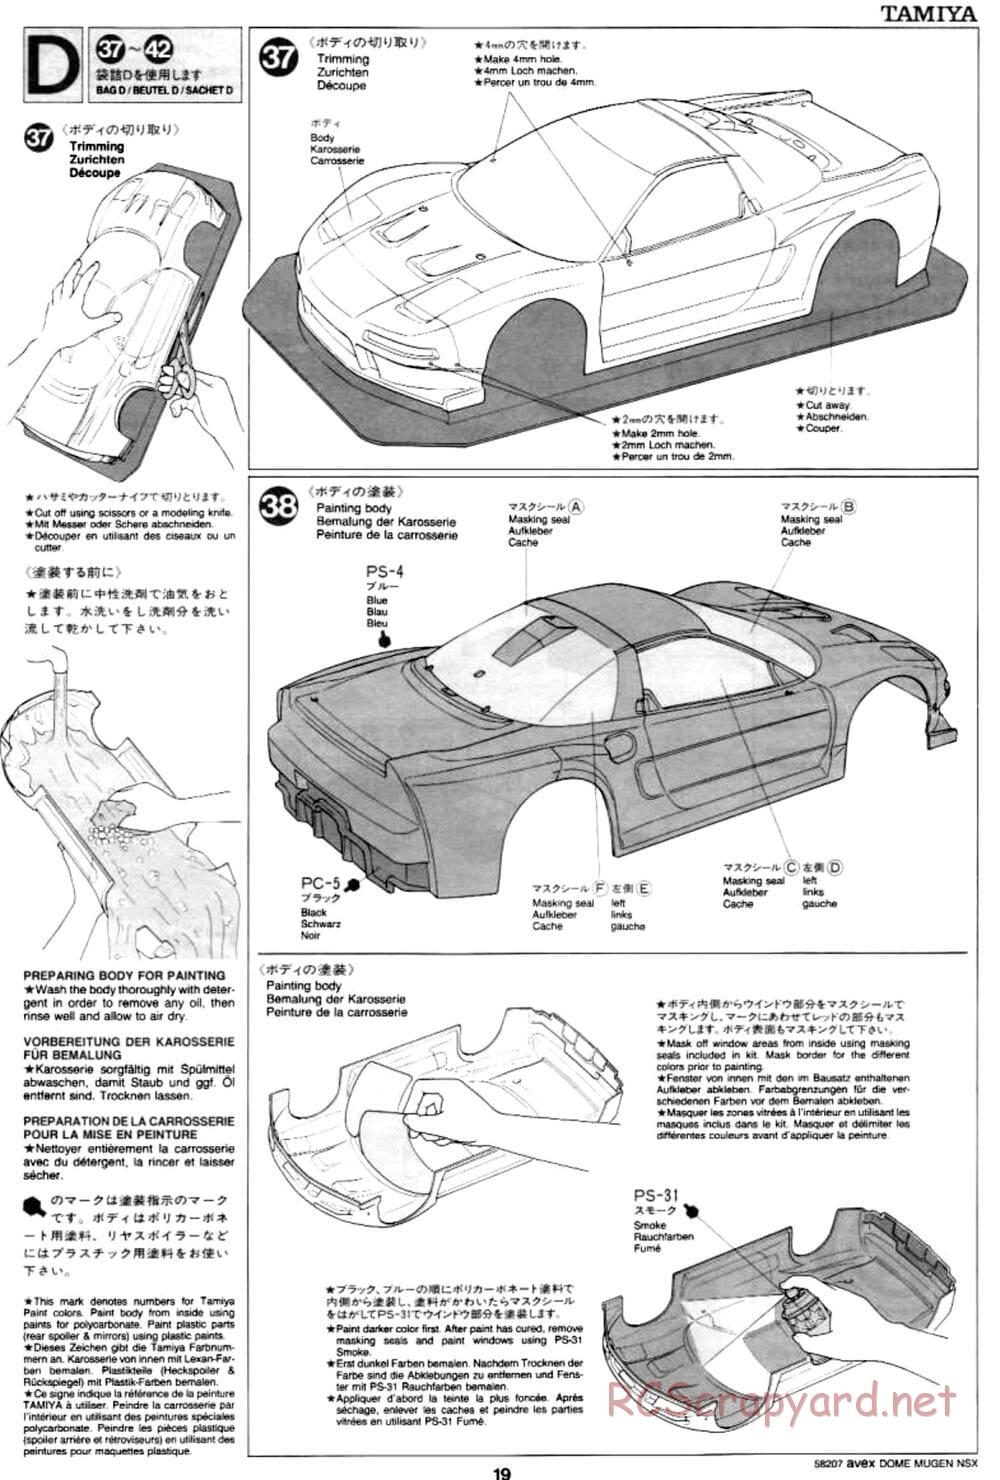 Tamiya - Avex Dome Mugen NSX - TA-03R Chassis - Manual - Page 19